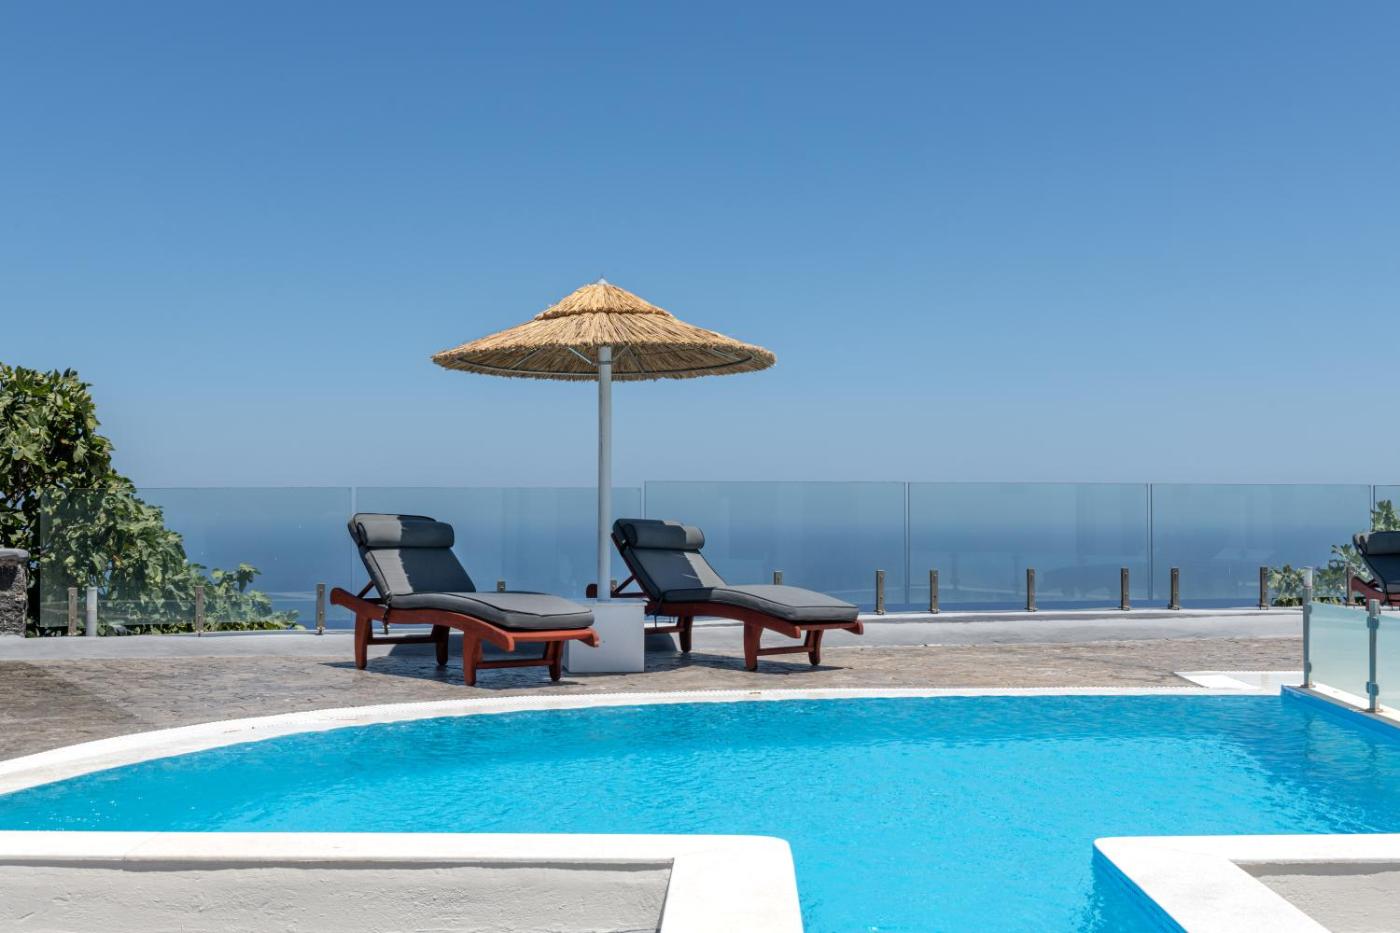 Hotel with private pool - Splendour Resort